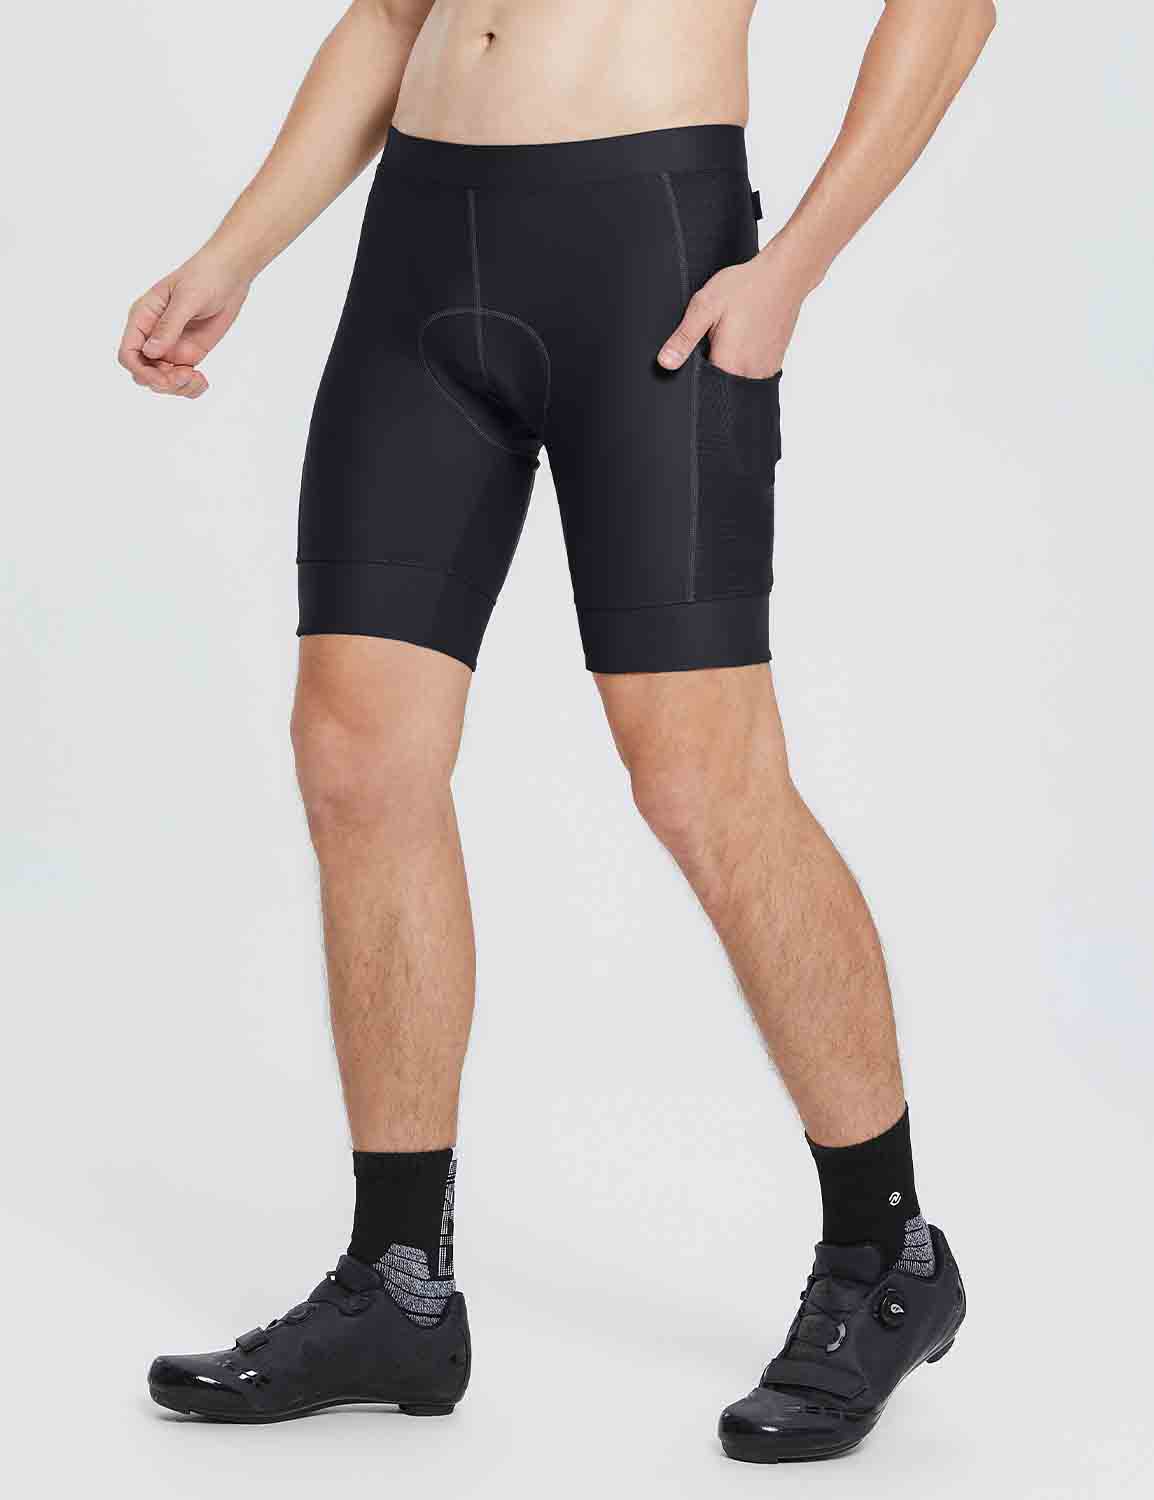 BALEAF Men's Cycling Underwear Bike Shorts 4D Padded Mountain Liner Biking  Bicycle Undershorts Anti-Slip : : Clothing, Shoes & Accessories